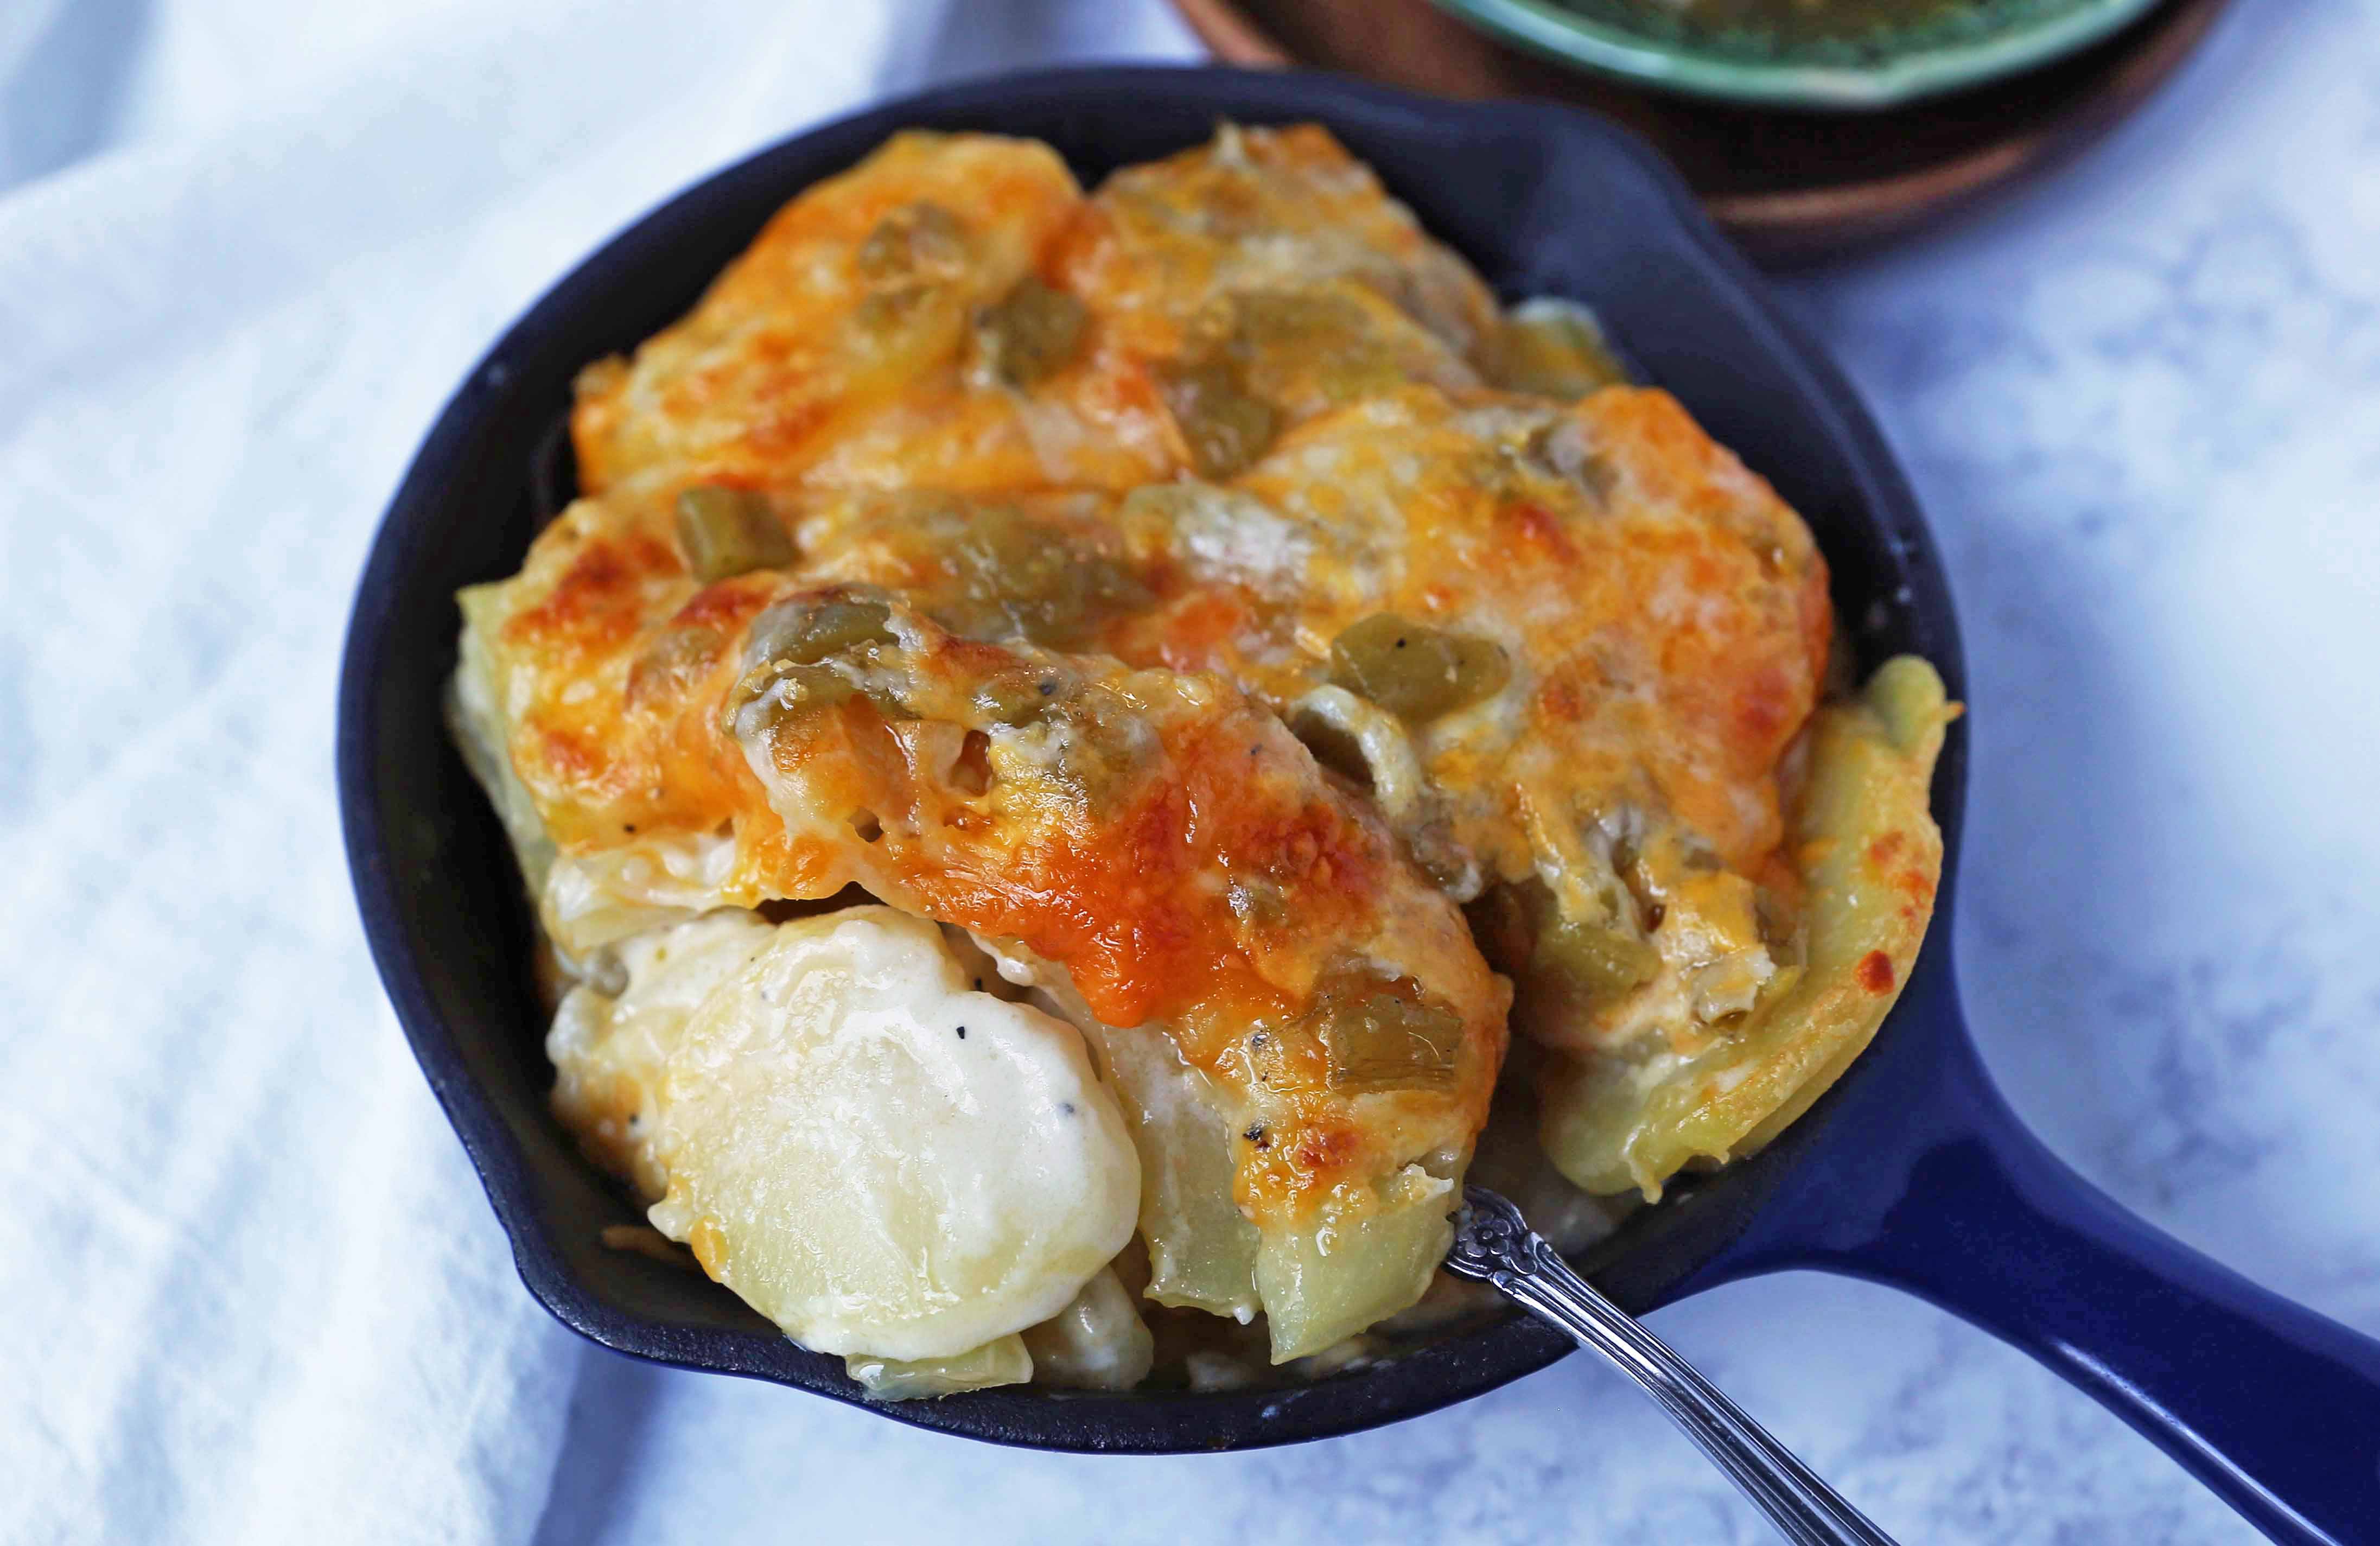 Cheesy Potatoes Au Gratin. Homemade cheesy scalloped potatoes with a rich cream sauce and melted cheddar cheese. The perfect potato side dish recipe! www.modernhoney.com #scallopedpotatoes #potatoesaugratin #potatoes #potato #thanksgiving